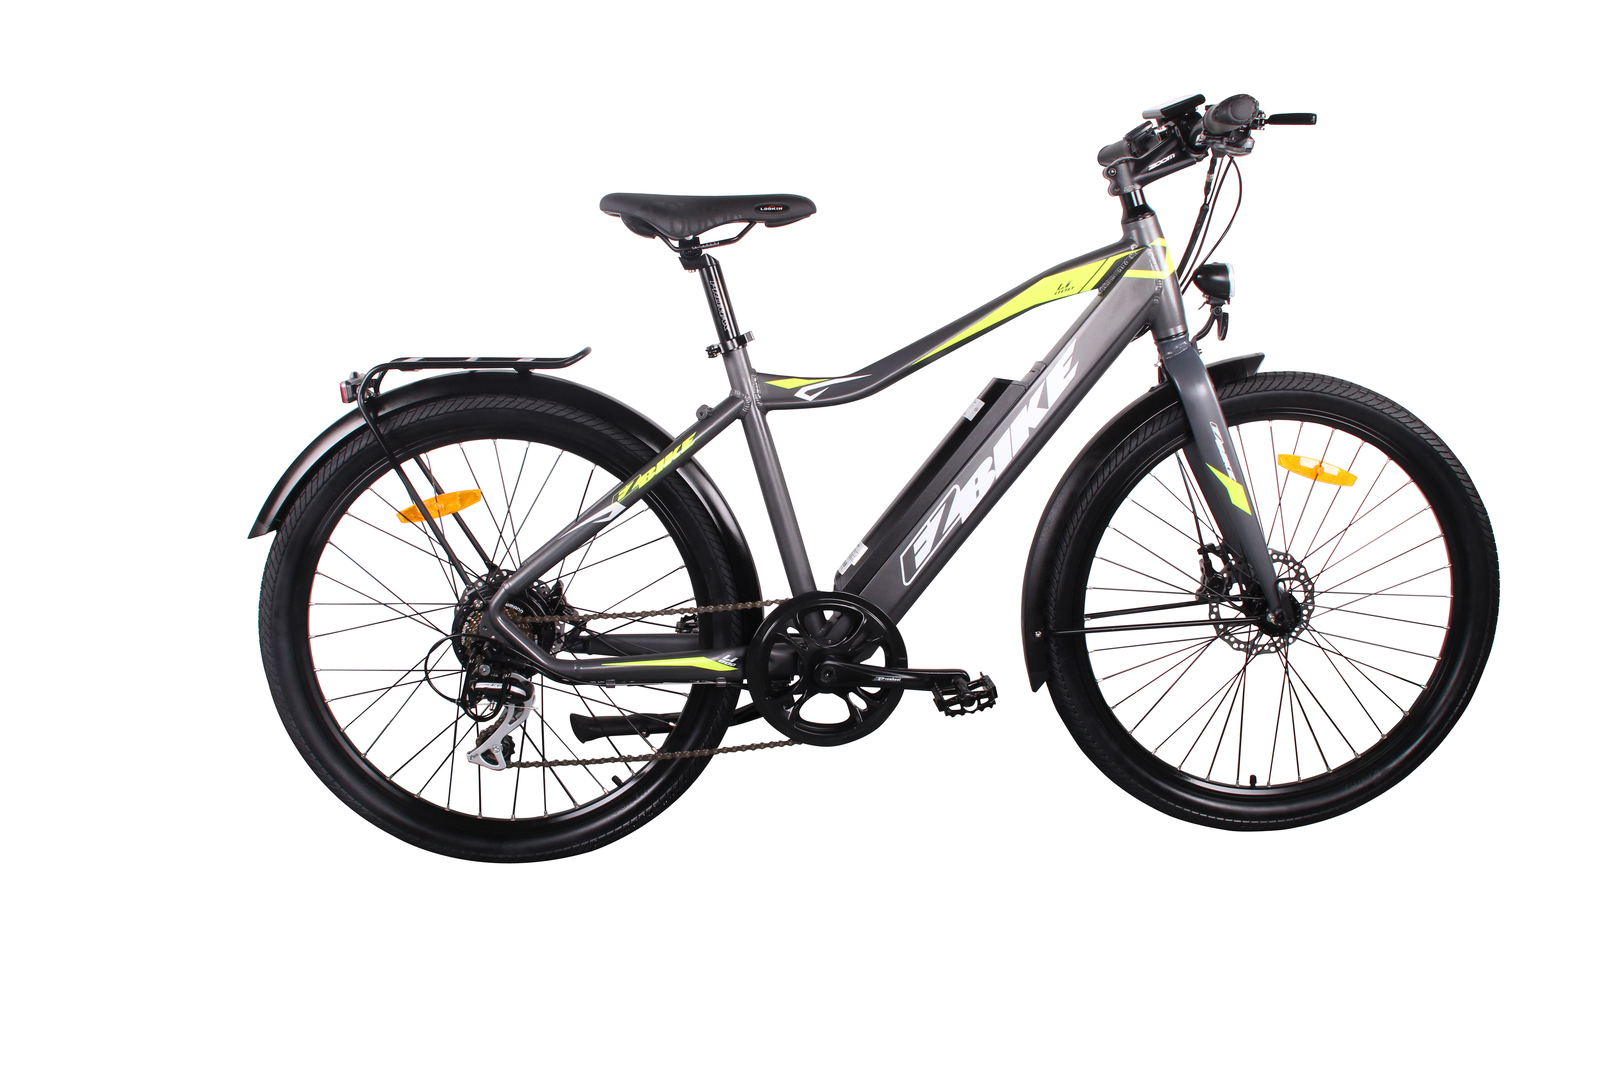 Universal Electric Bicycle 250W 36V 10.4Ah Li-Ion Battery Sw-Lcd Display Hydraulic Brakes 26X2.10 Gents Universal Electric Bicycle 250W 36V 10.4Ah Li-Ion Battery Sw-Lcd Display Hydraulic Brakes 26X2.10 Gents